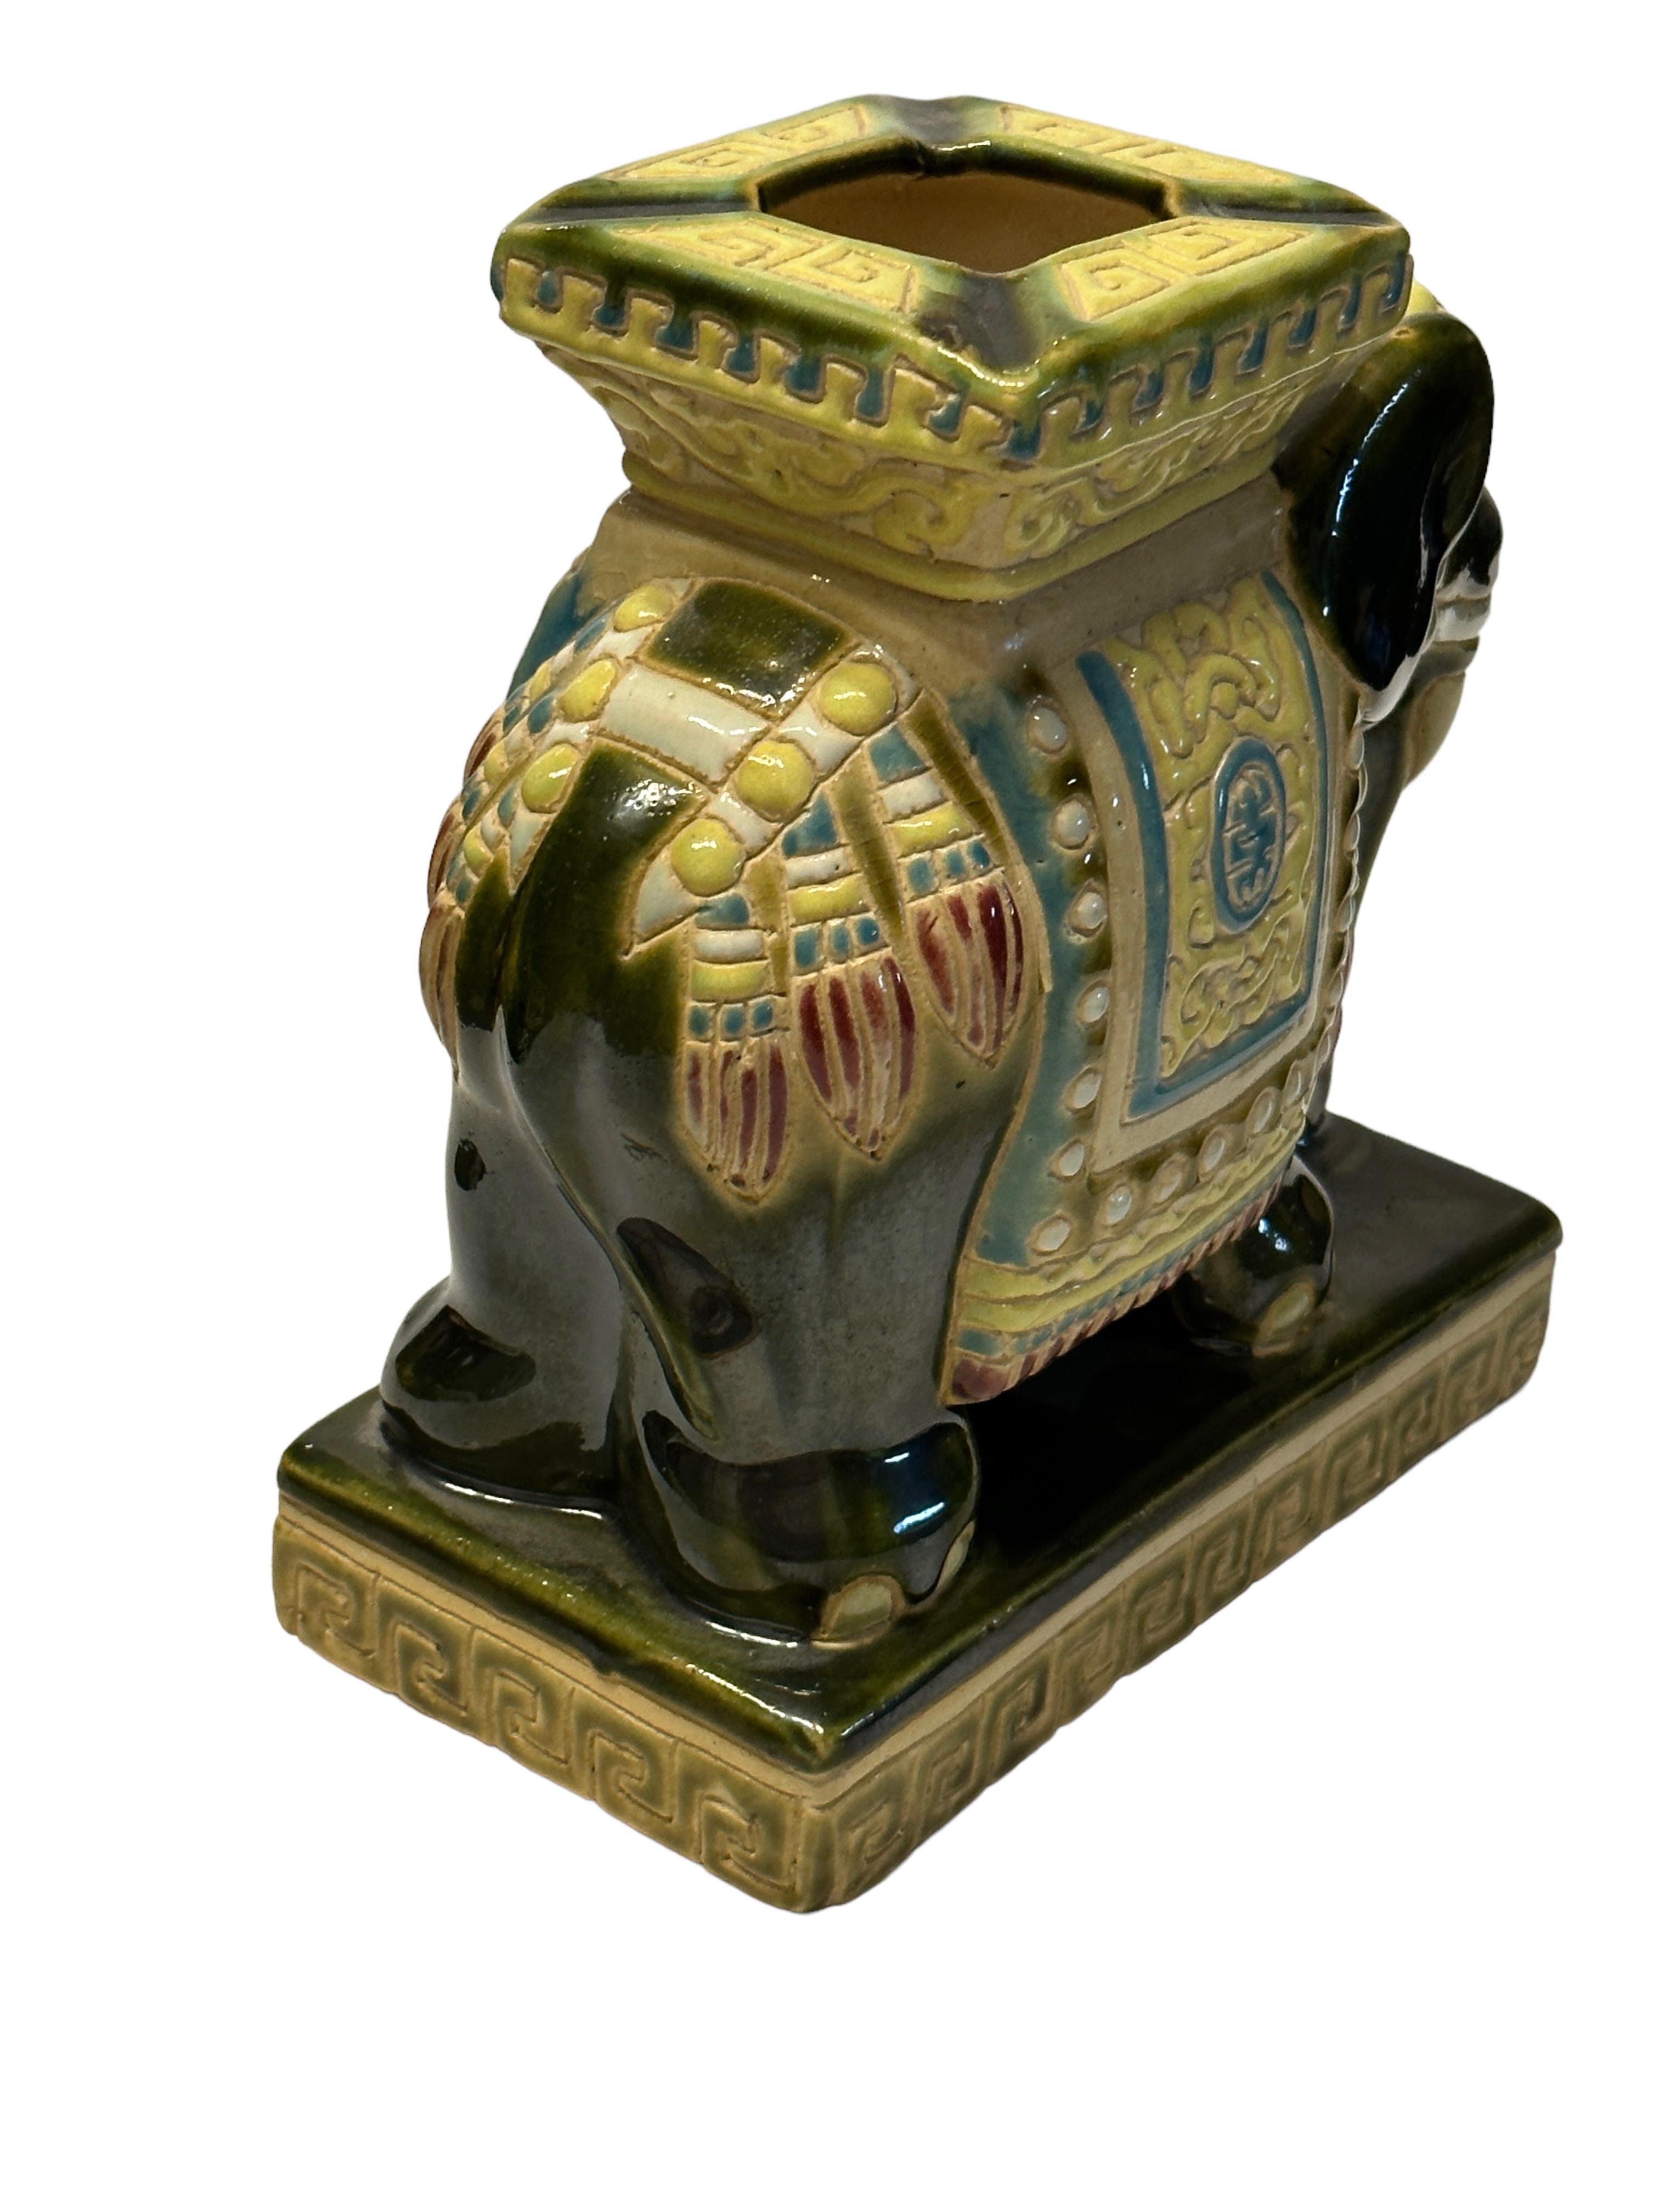 German Petite Vintage Hollywood Regency Chinese Ceramic Elephant Ashtray For Sale